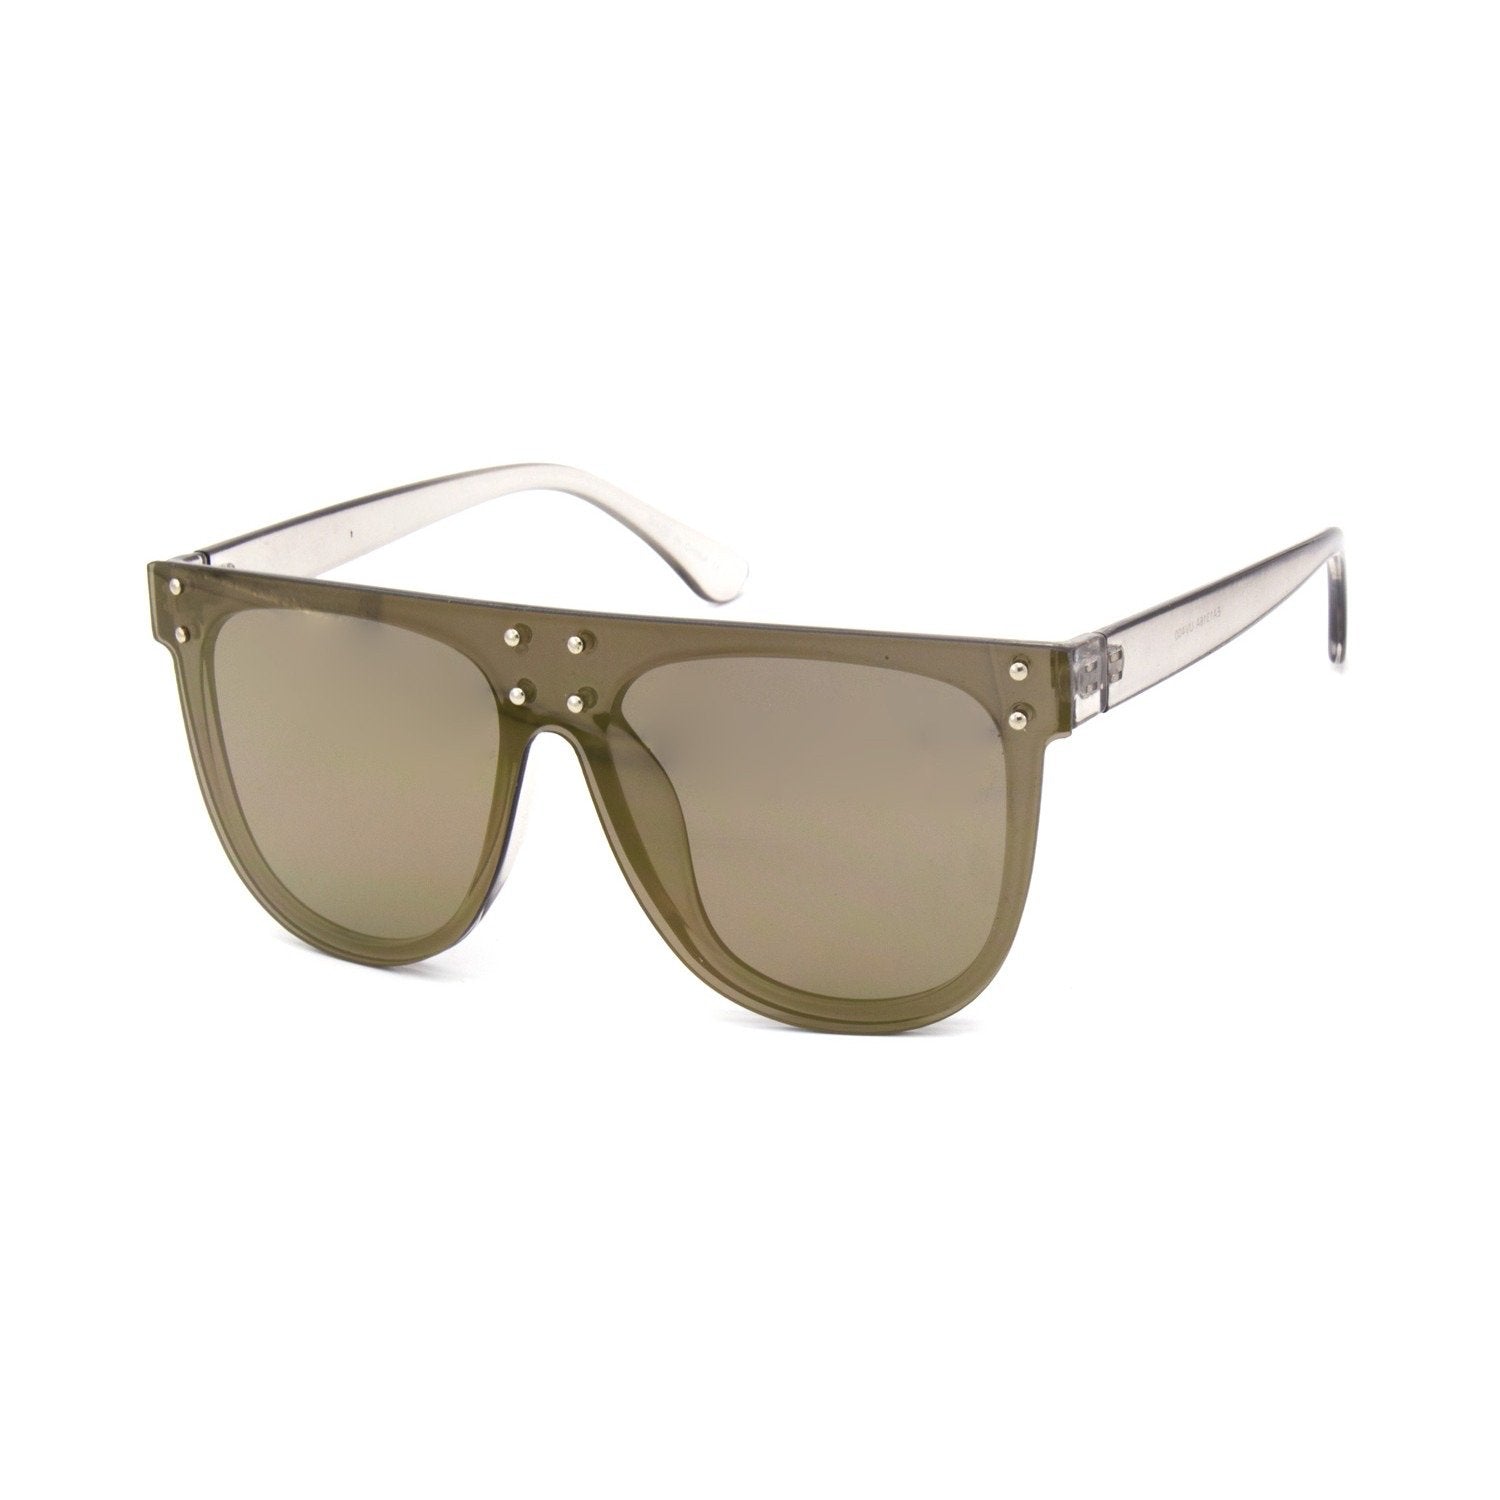 “NEW ME” Reflective Sunglasses - Weekend Shade Sunglasses